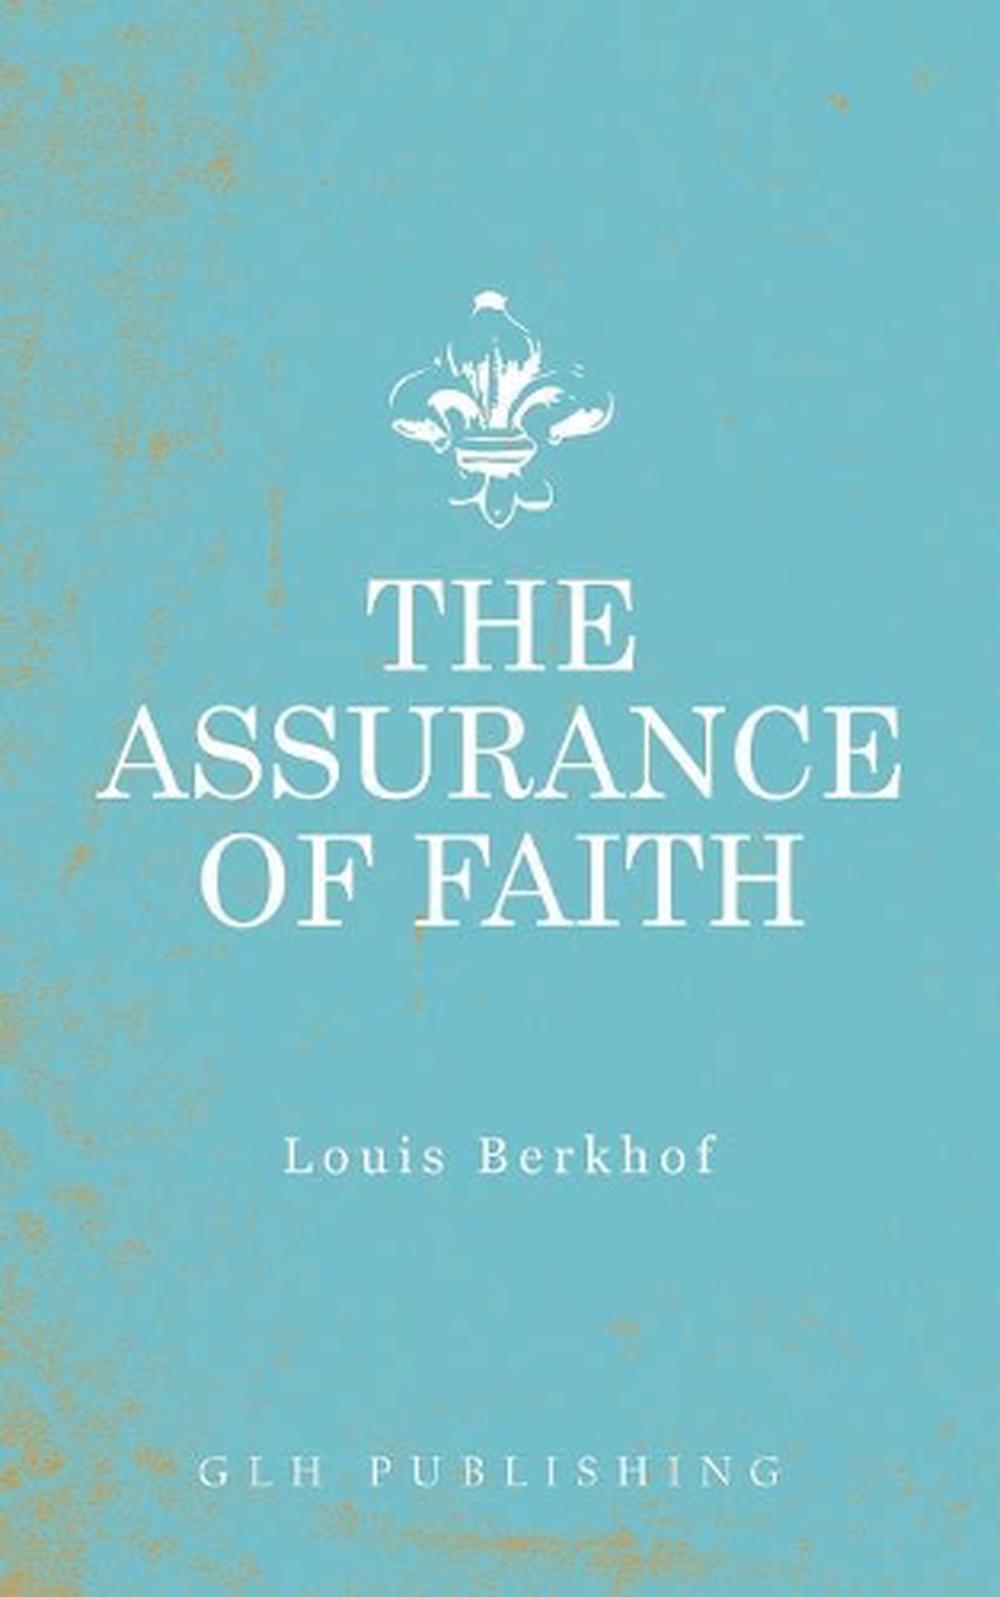 God in the Dark: The Assurance of Faith Beyond a Shadow of Doubt